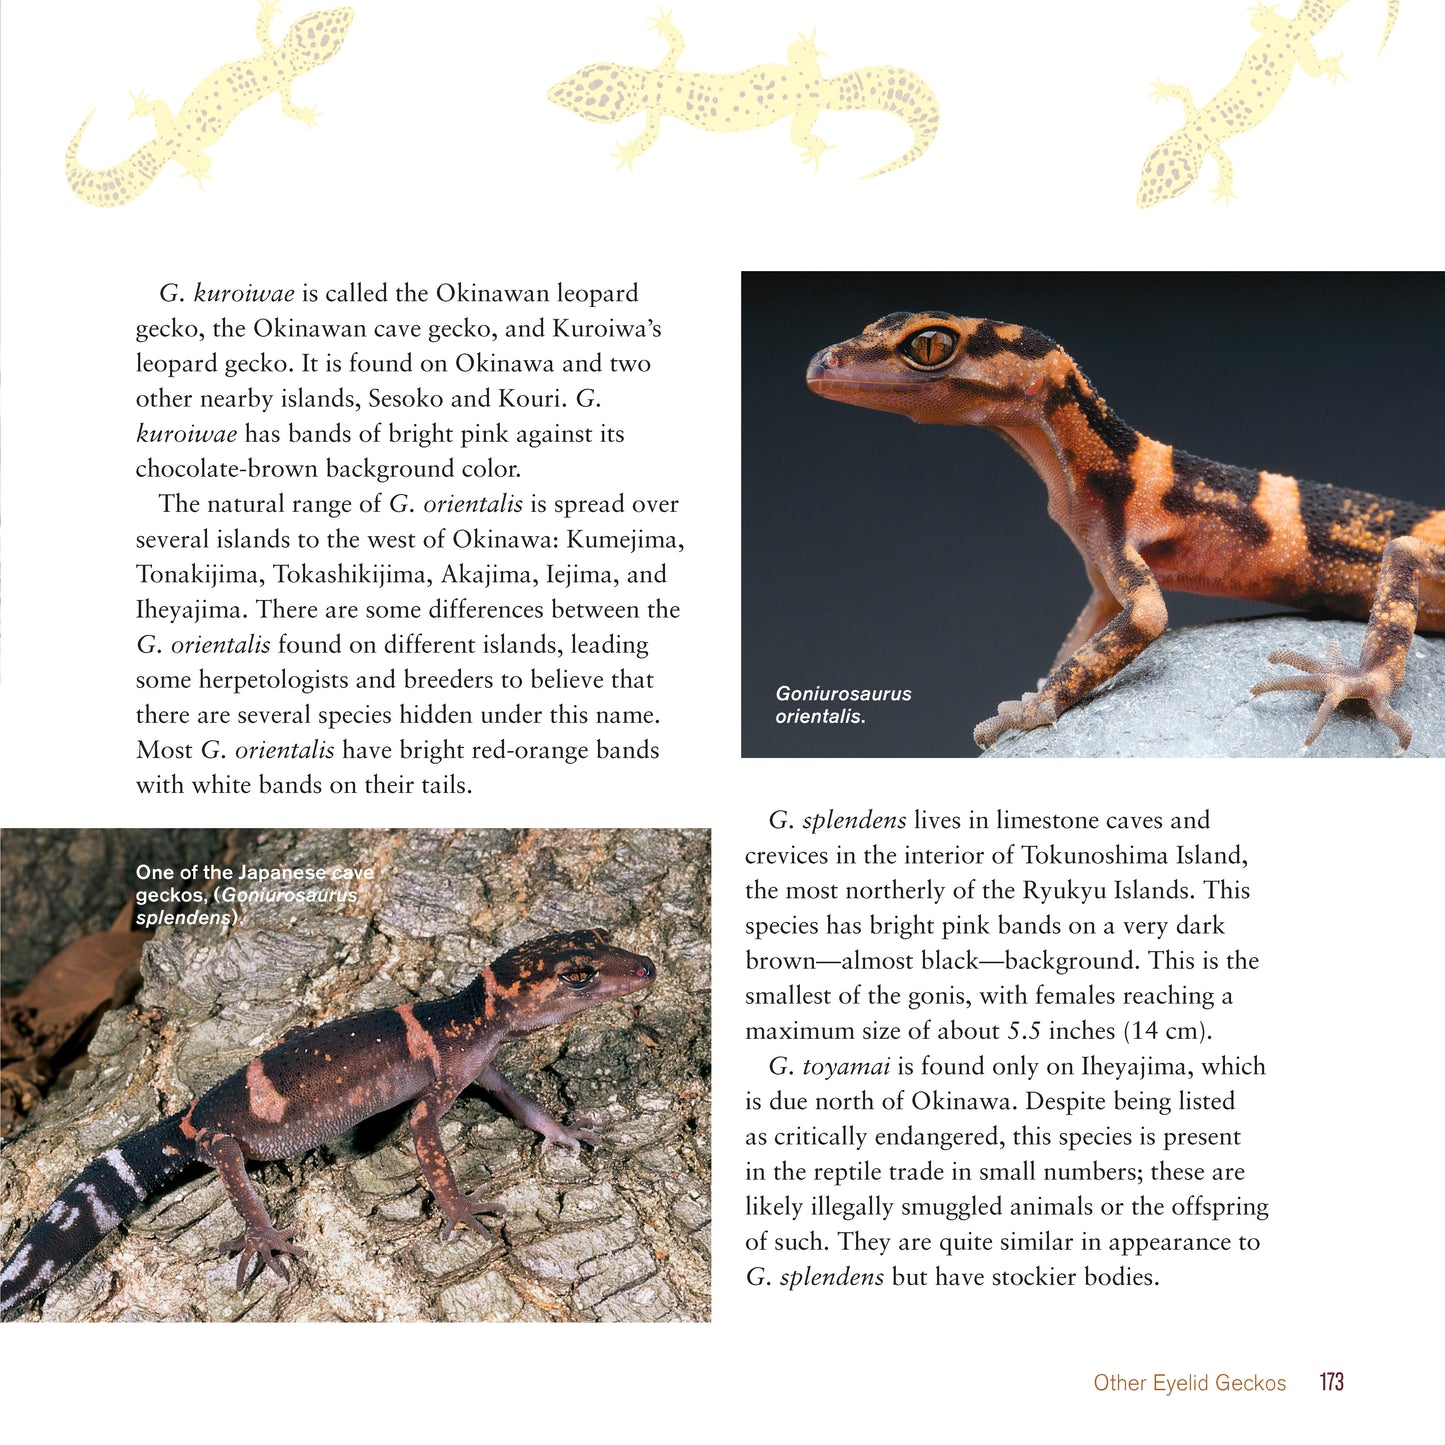 The Leopard Gecko Manual